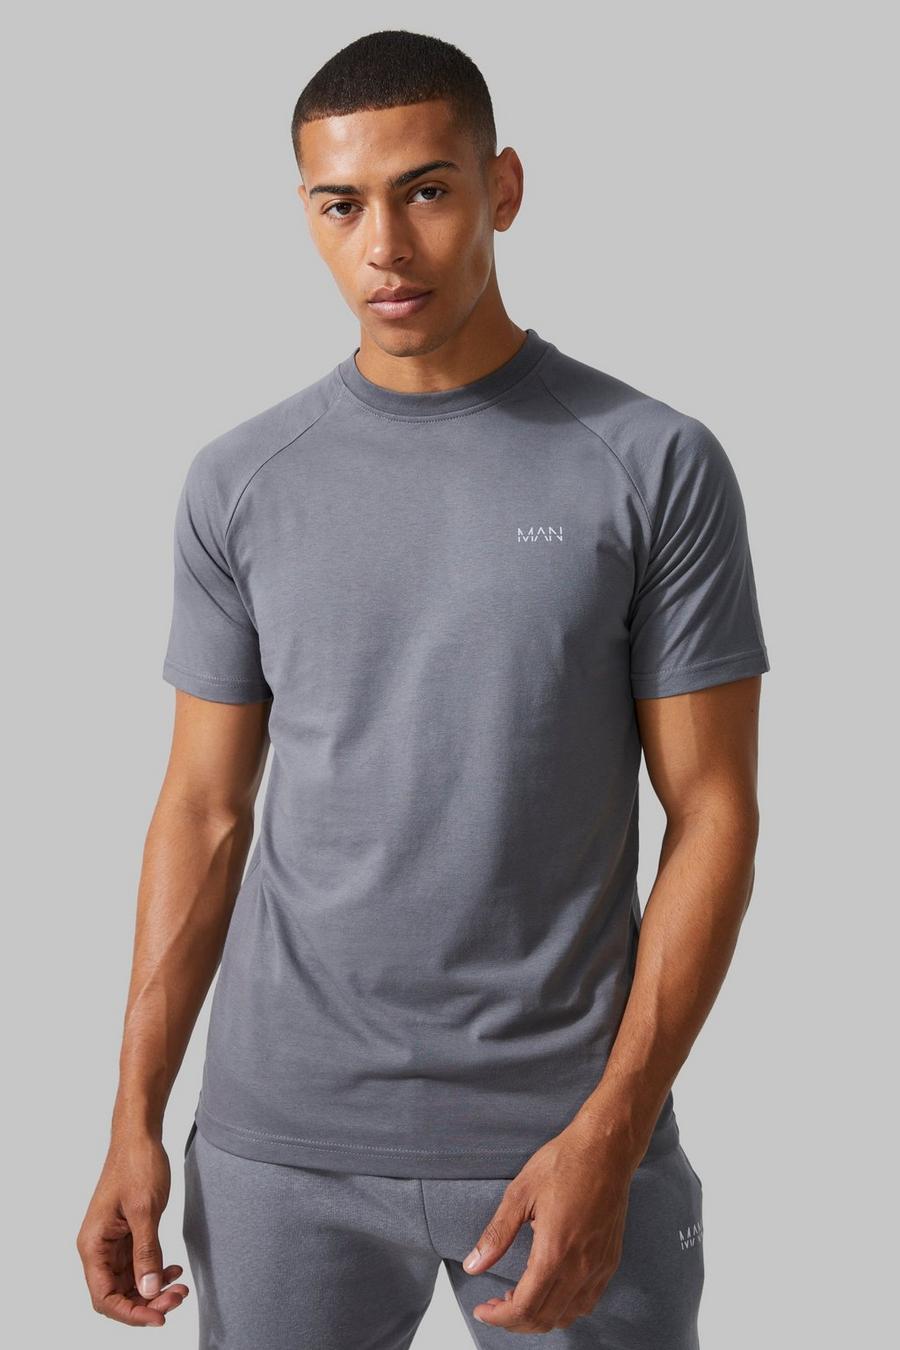 Charcoal grau Man Active Gym Raglan T-shirt